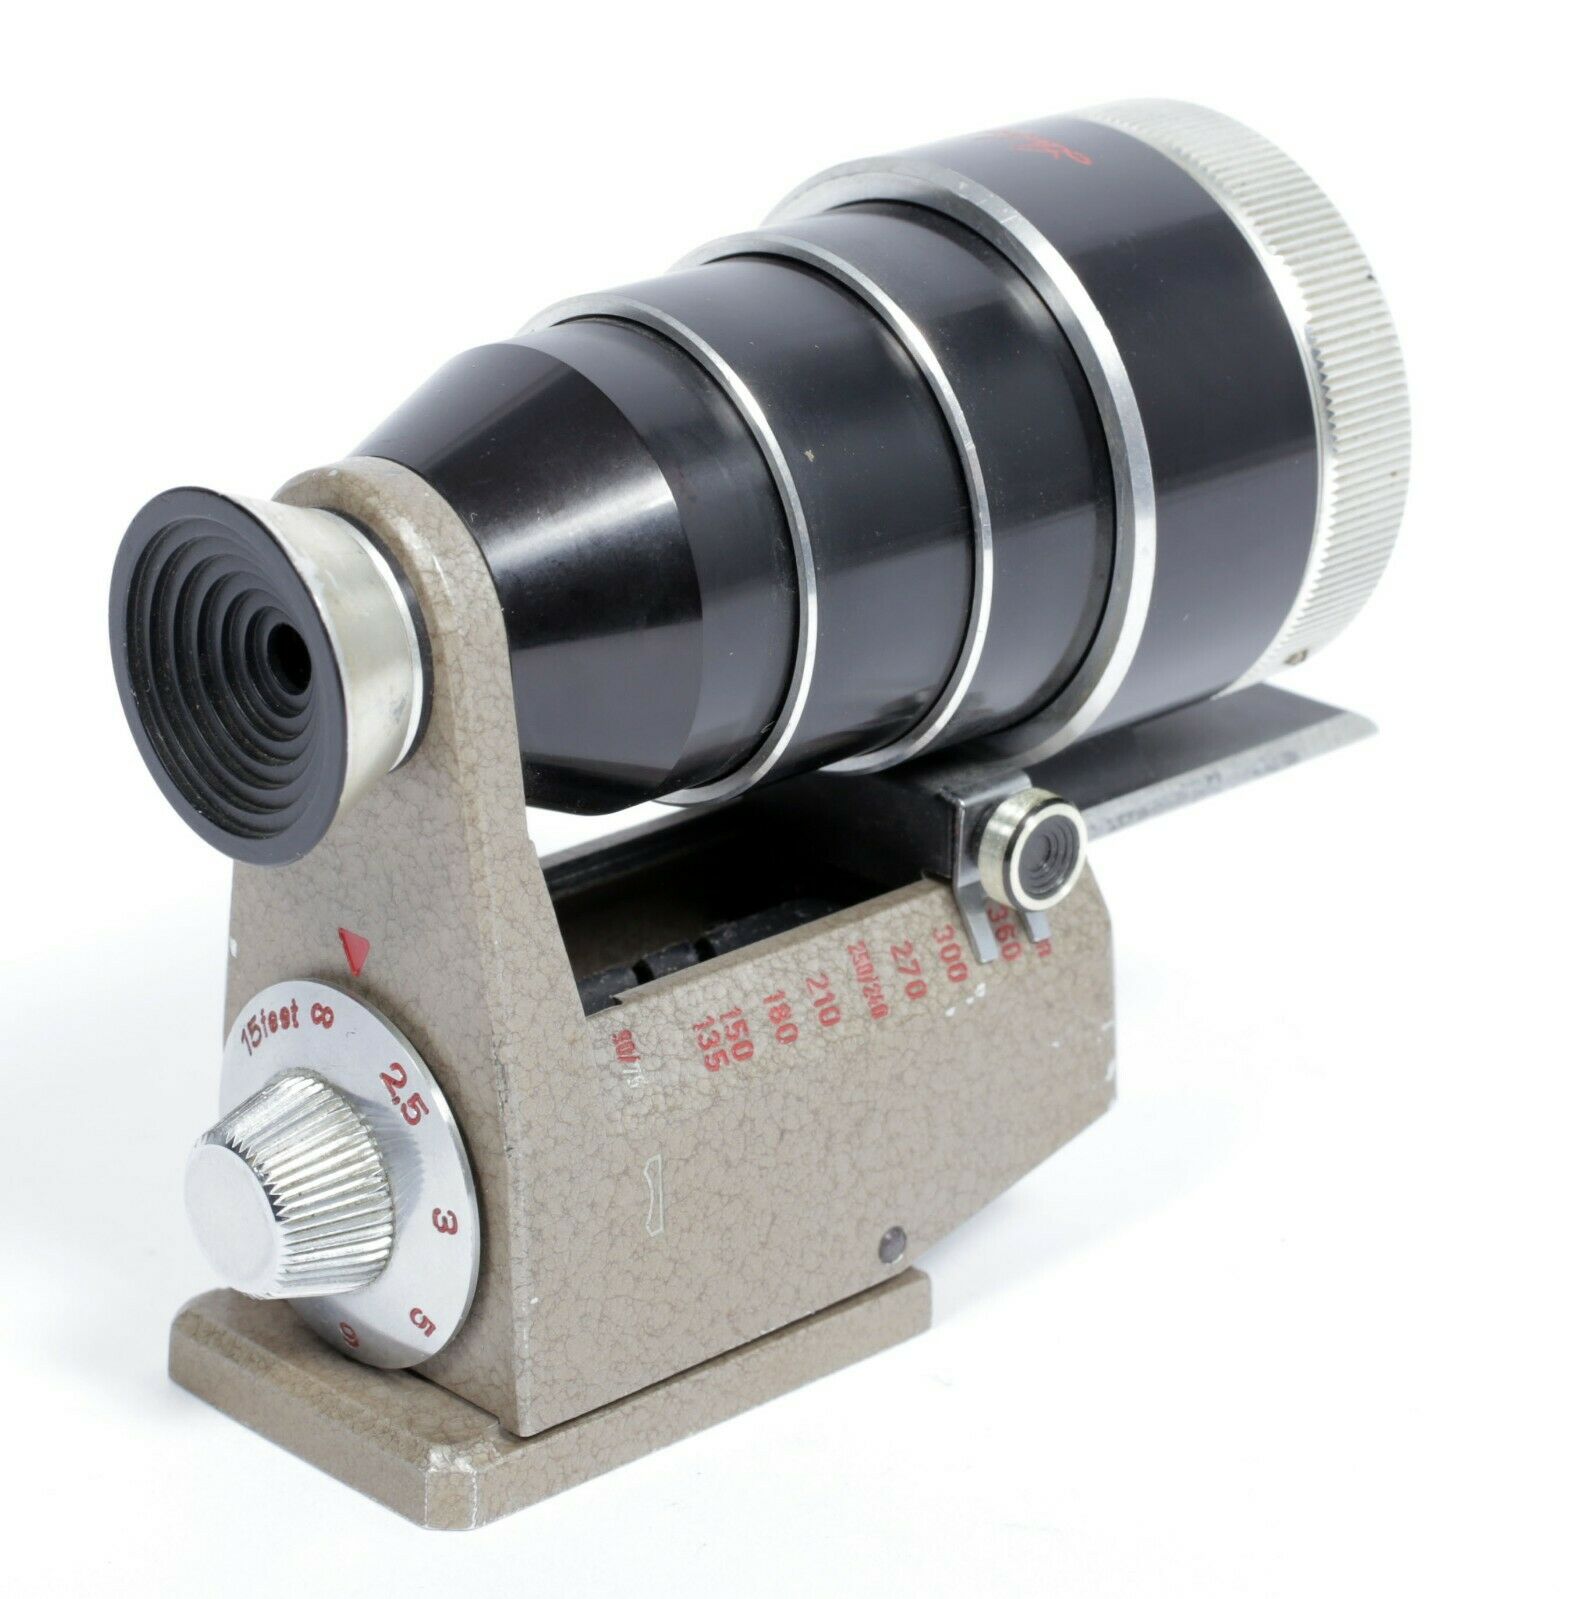 Universal Linhof Technika multi focal length frame finder 90-360mm #614